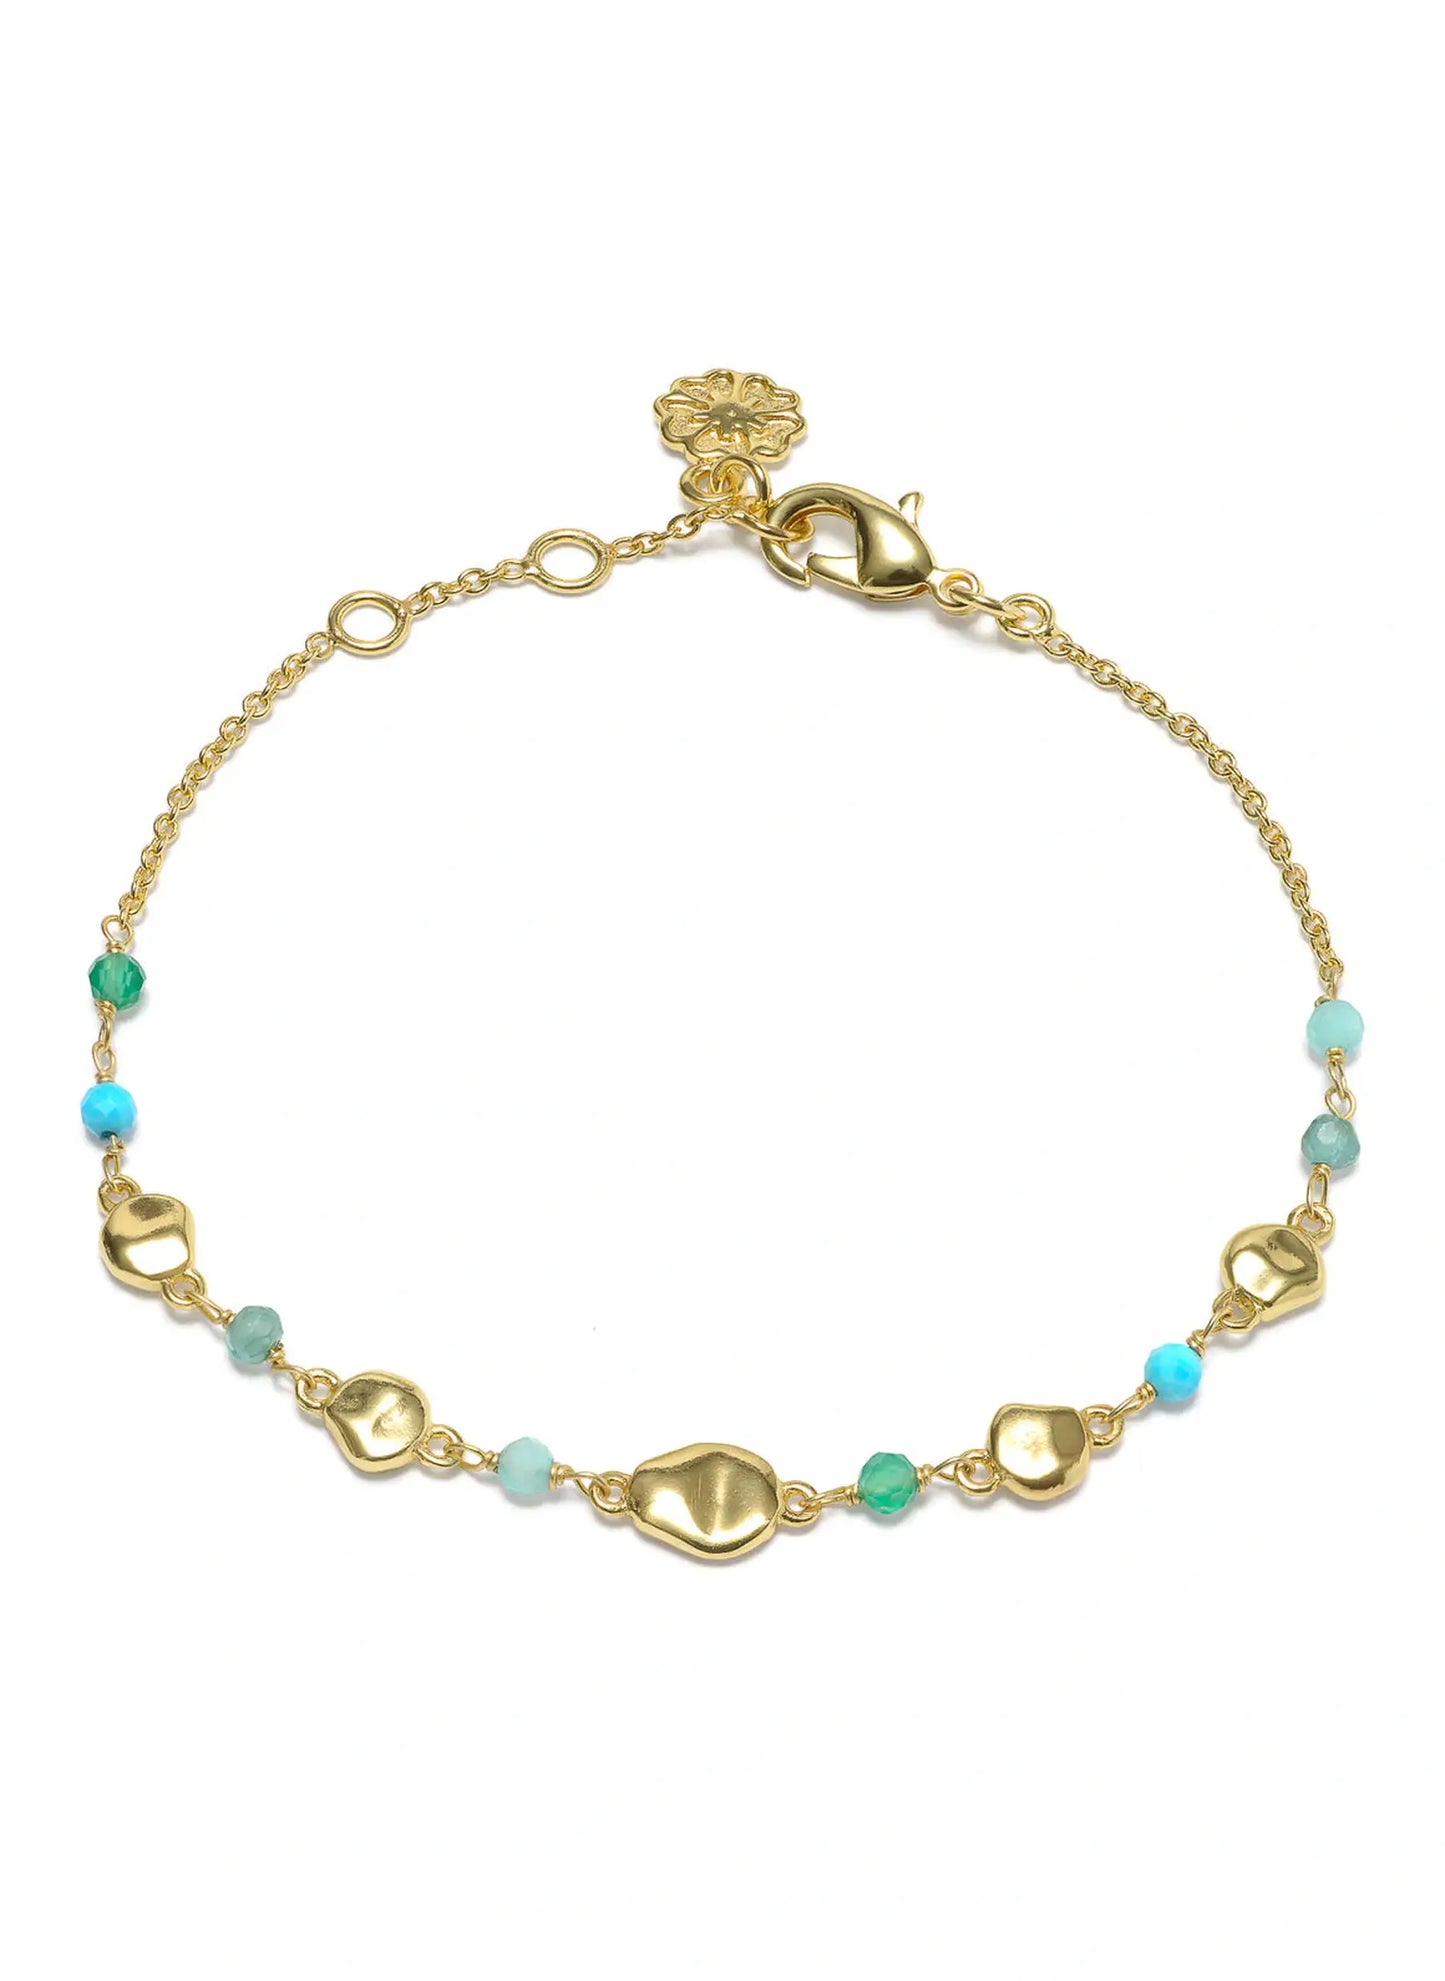 Sofia Gemstone and Gold Bead and Nugget Bracelet - Aqua